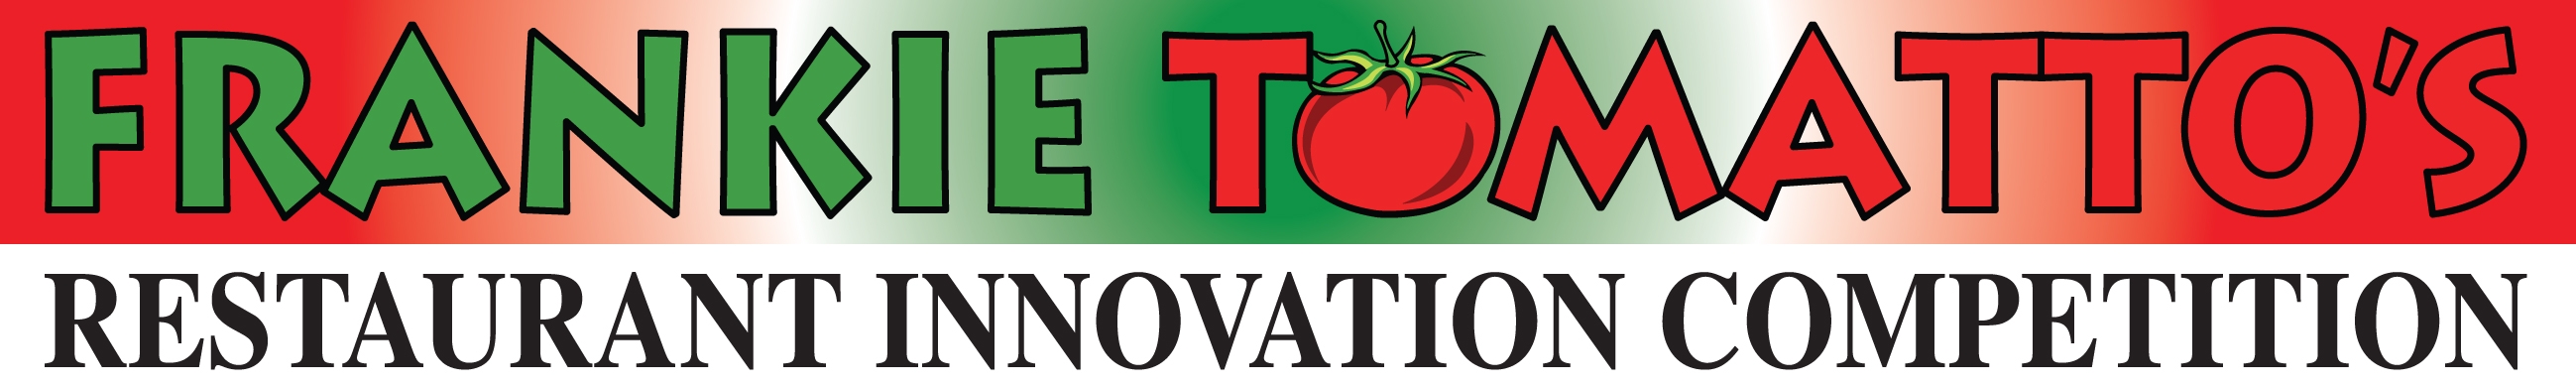 Frankie Tomatto's Logo